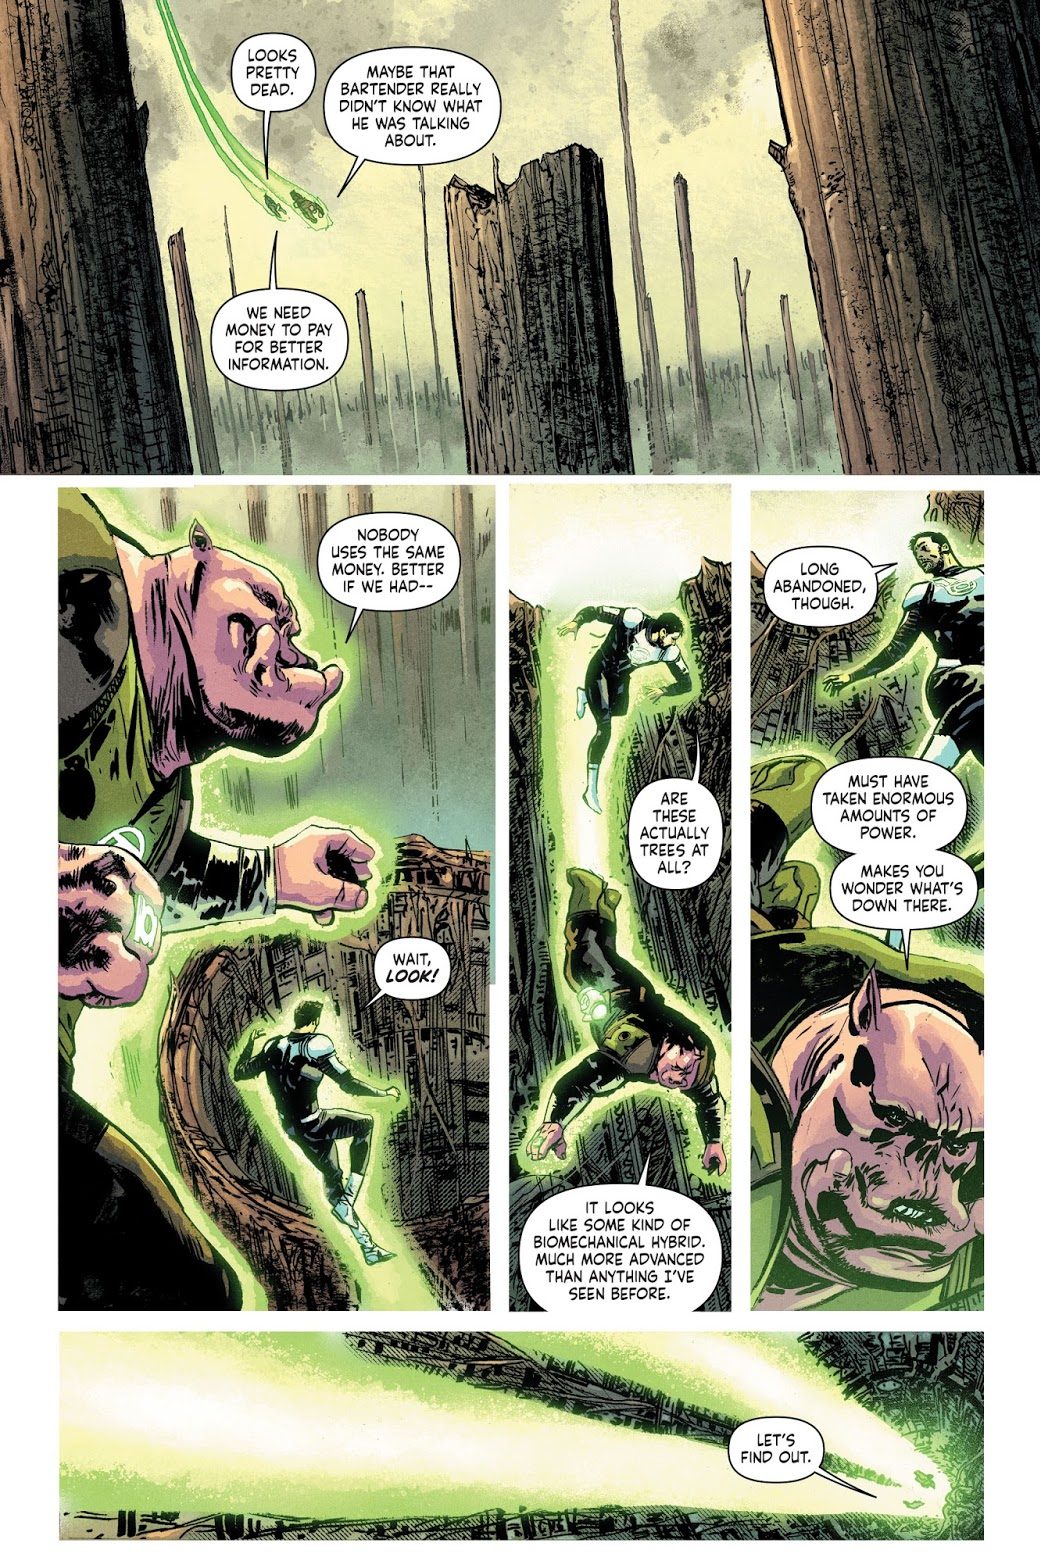 Hal-Jordan-Meets-Green-Lantern-Arisia-Earth-1